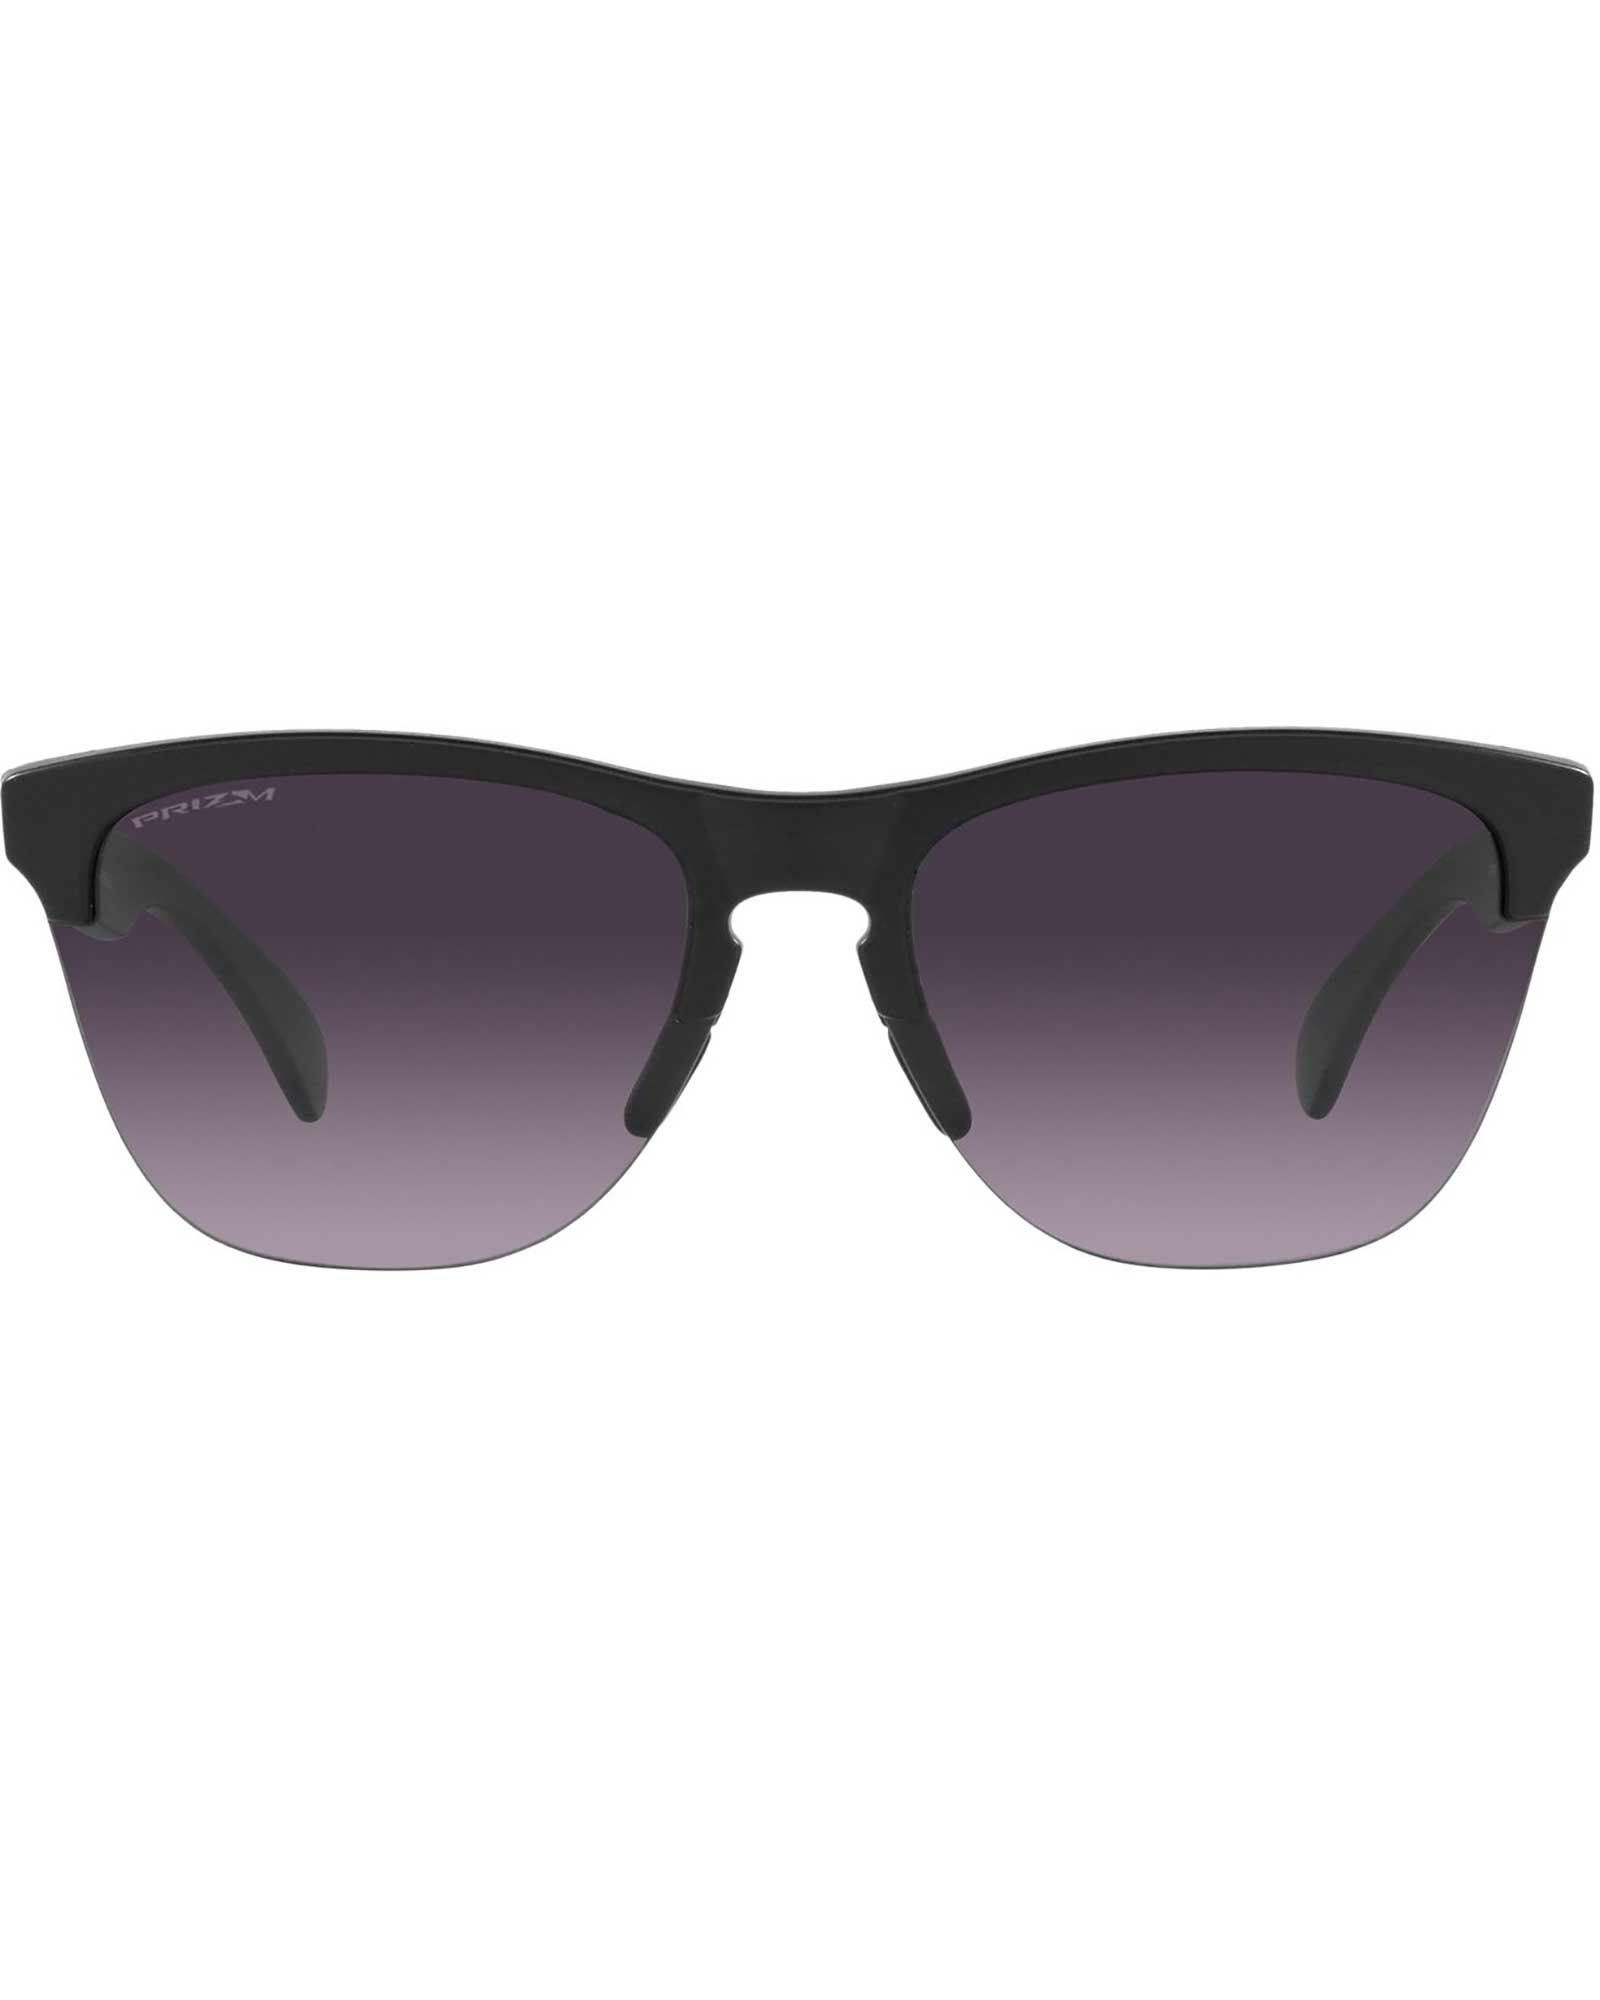 Oakley Frogskins Lite Matte Black / Prizm Grey Gradient Sunglasses